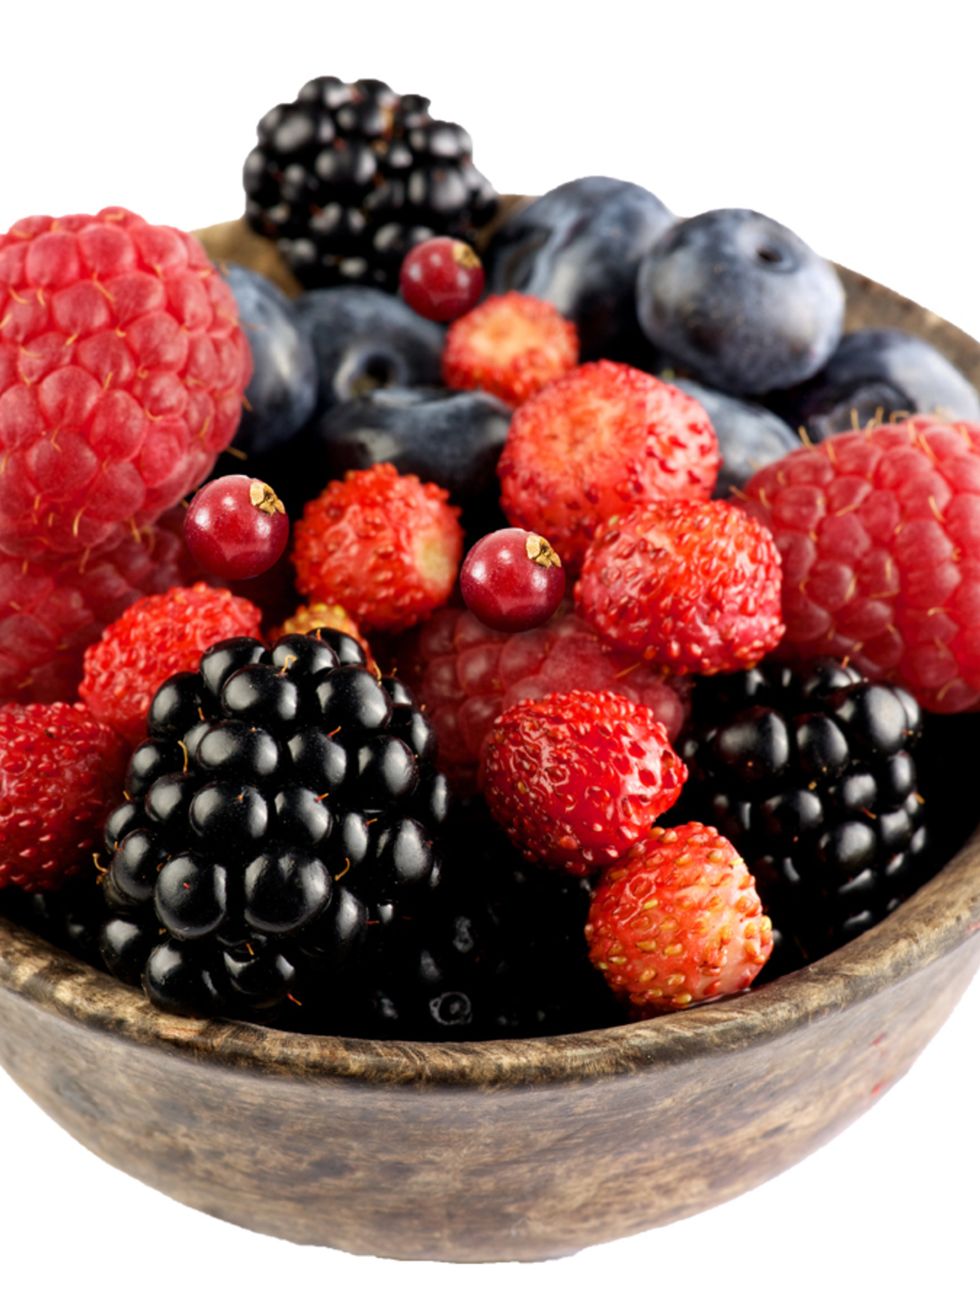 Boysenberry, Food, Fruit, Natural foods, Produce, Sweetness, Blackberry, Berry, Frutti di bosco, Bramble, 